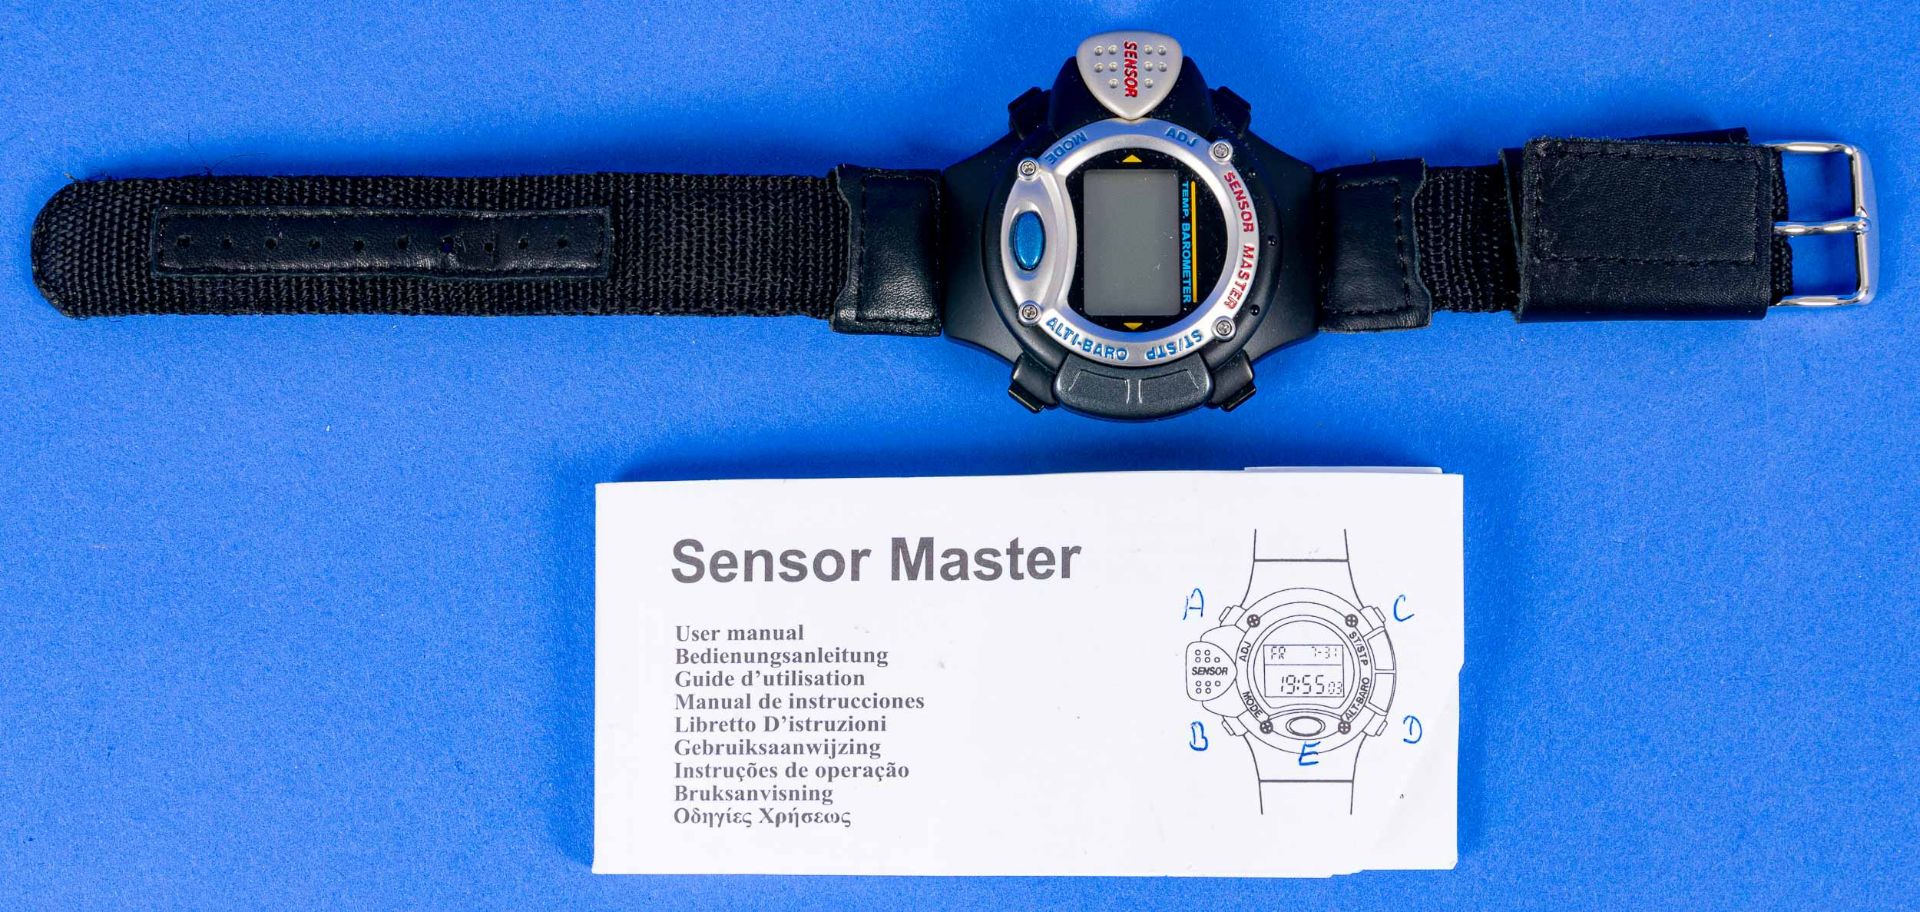 Swiss Sensormaster, Armbanduhr, Quarz, an Taucherarmband mit Dornschließe; Bedienungsanleitung beig